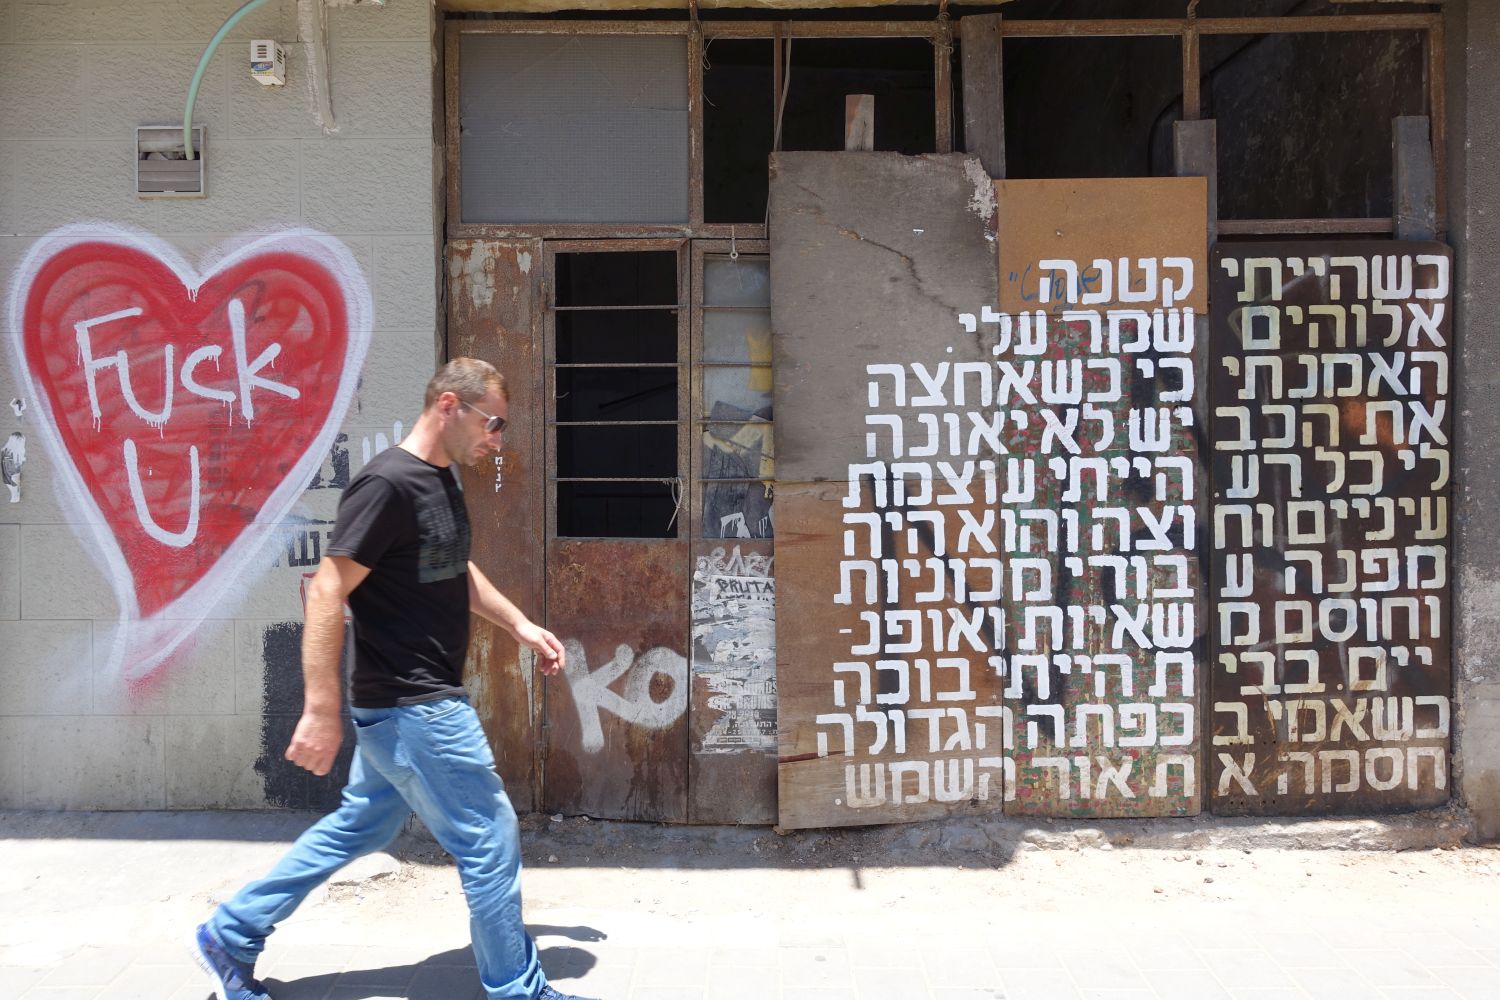 Tel Aviv street art | Fuck U | Poem in Hebrew | Israel | ©sandrine cohen